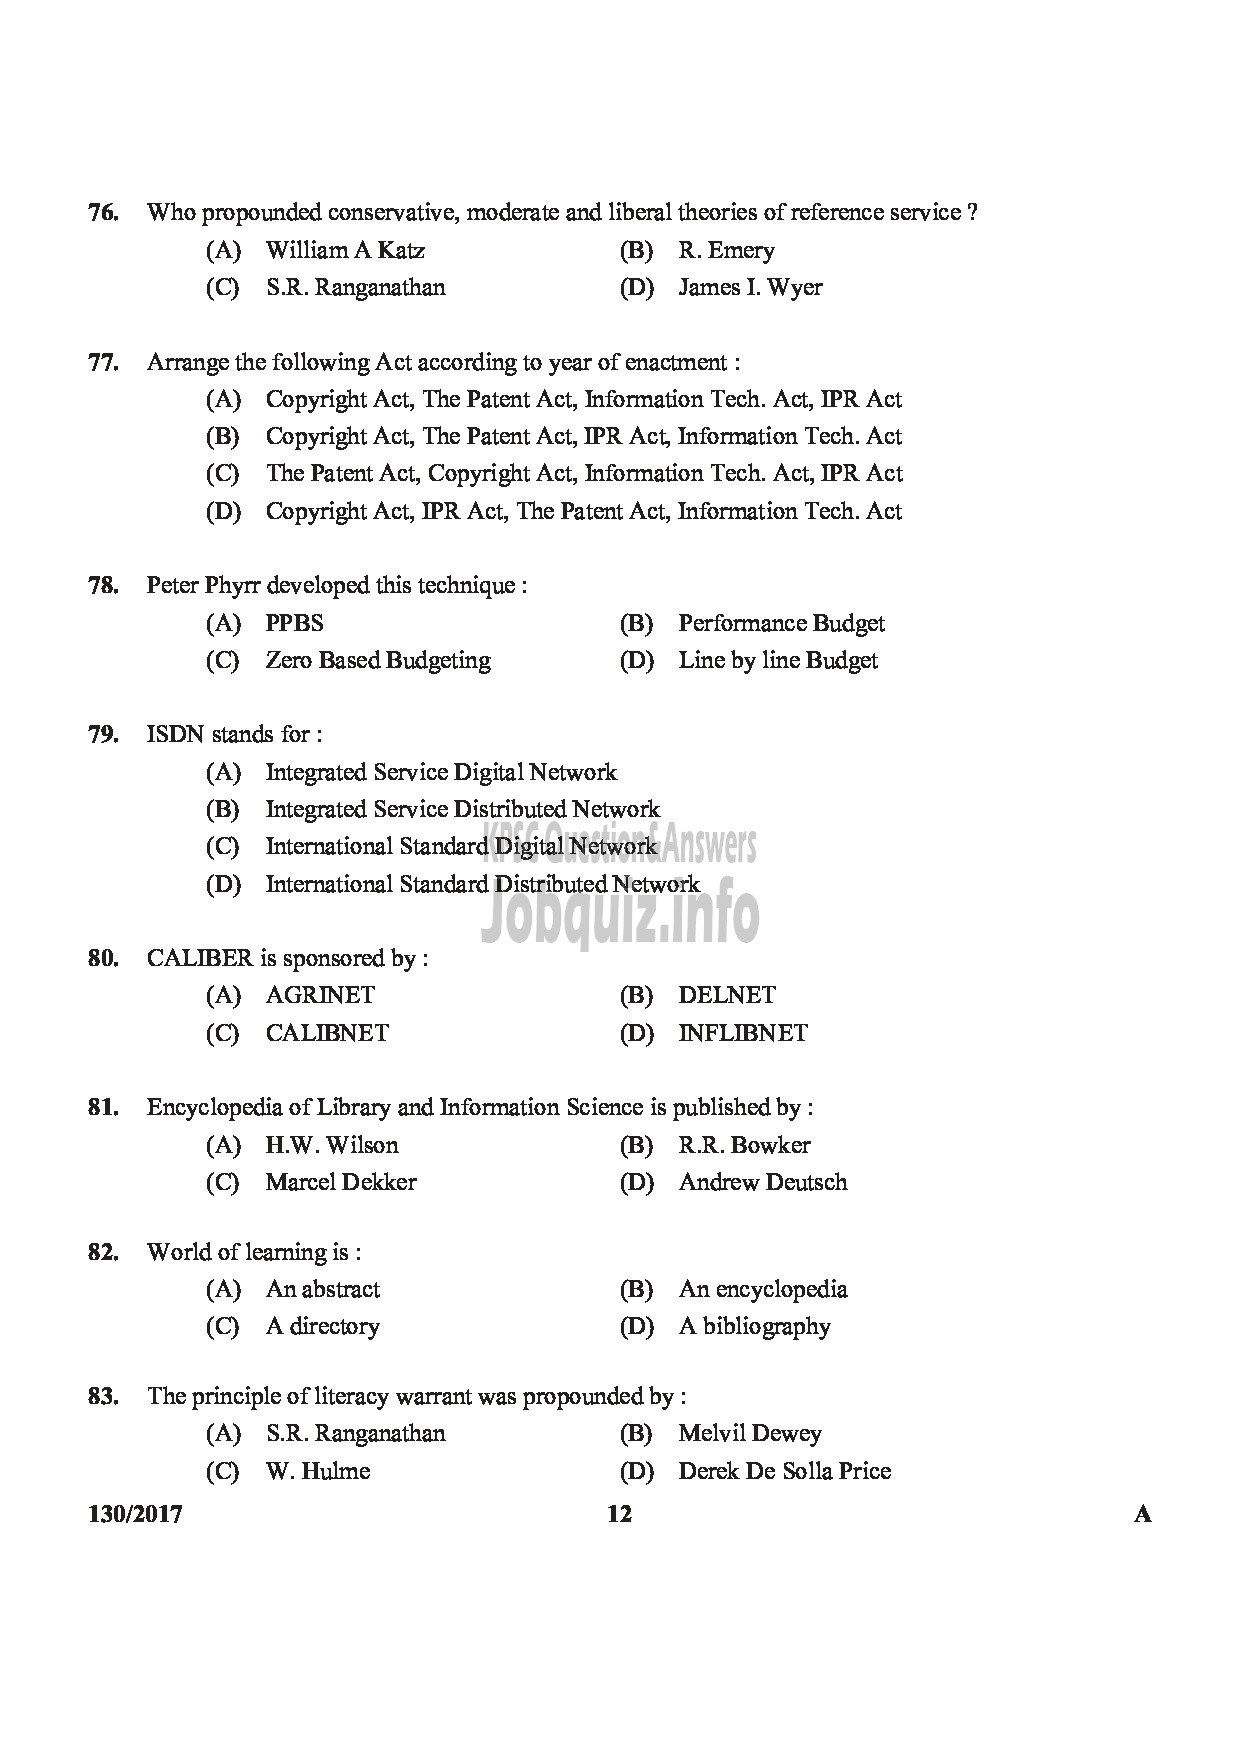 Kerala PSC Question Paper - LIBRARIAN GRADE IV PANCHAYAT-12